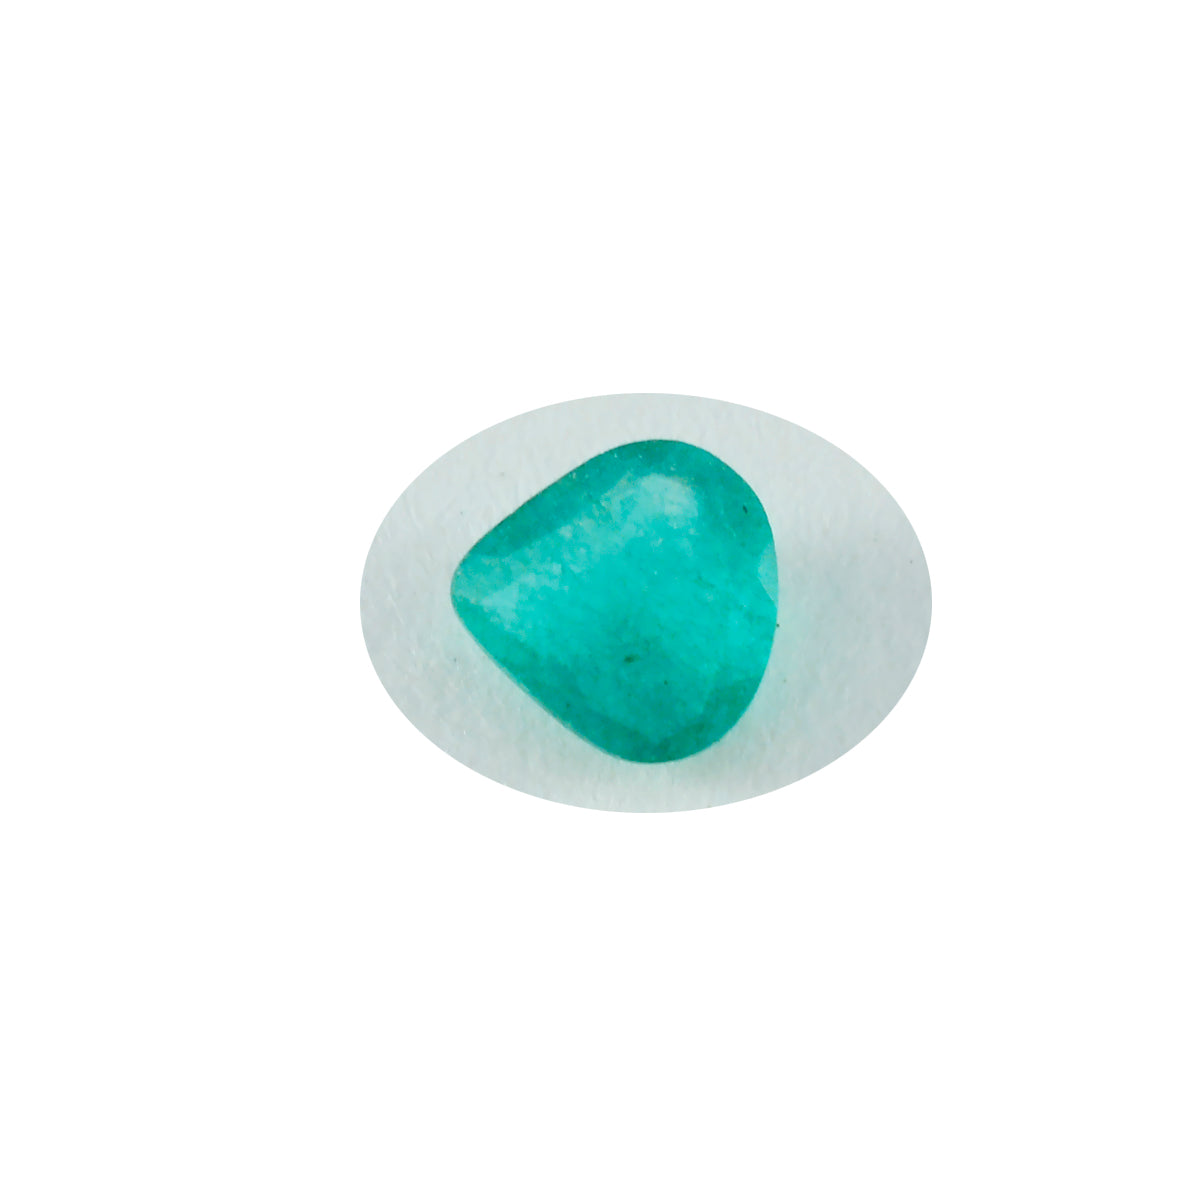 Riyogems 1PC Real Green Jasper Faceted 10x10 mm Heart Shape AAA Quality Loose Gemstone